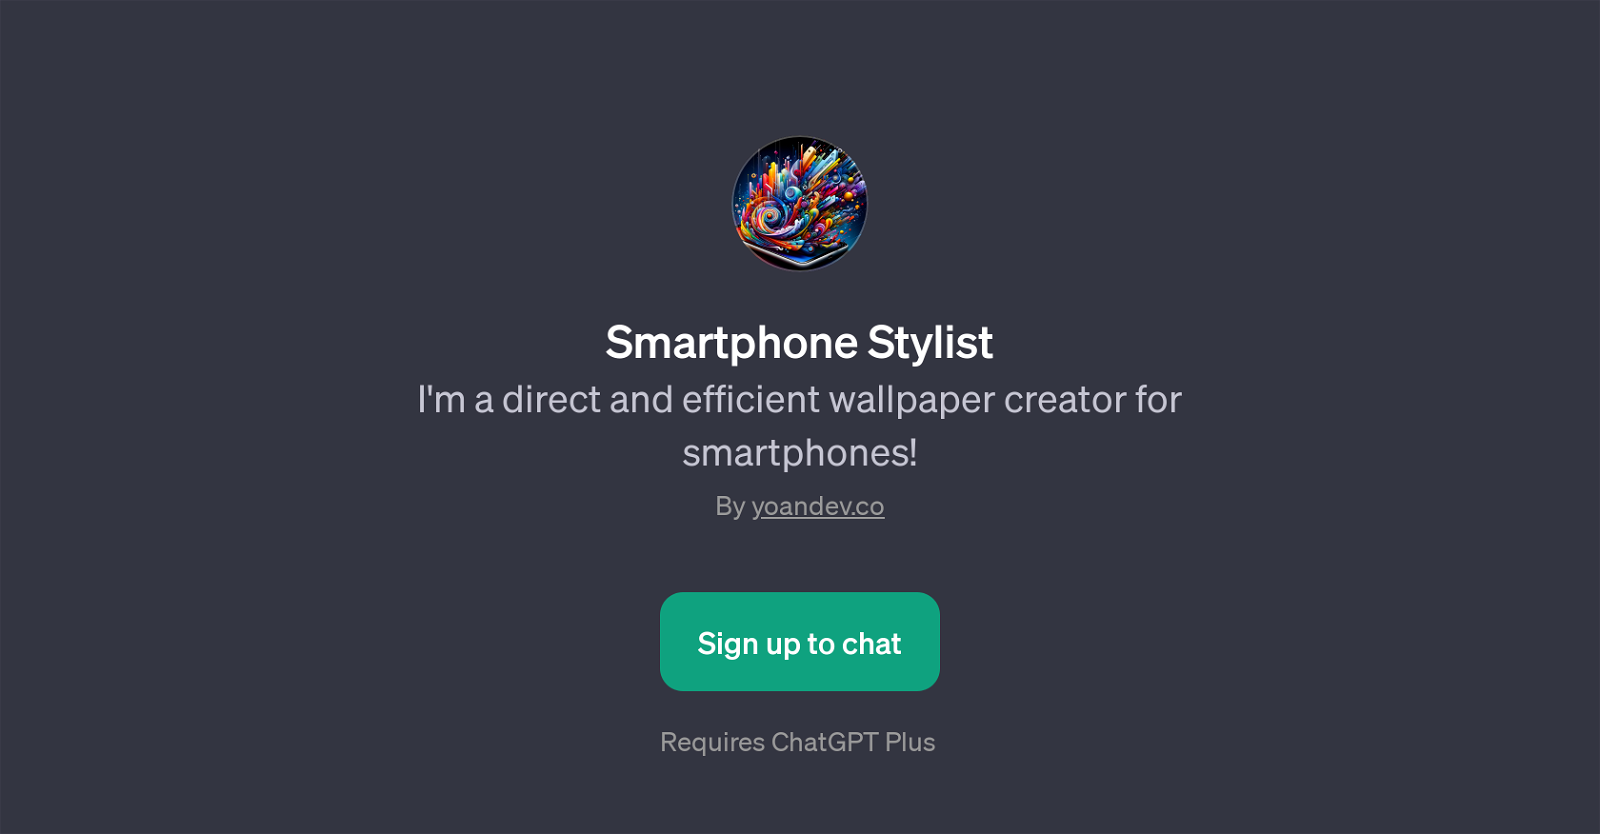 Smartphone Stylist website